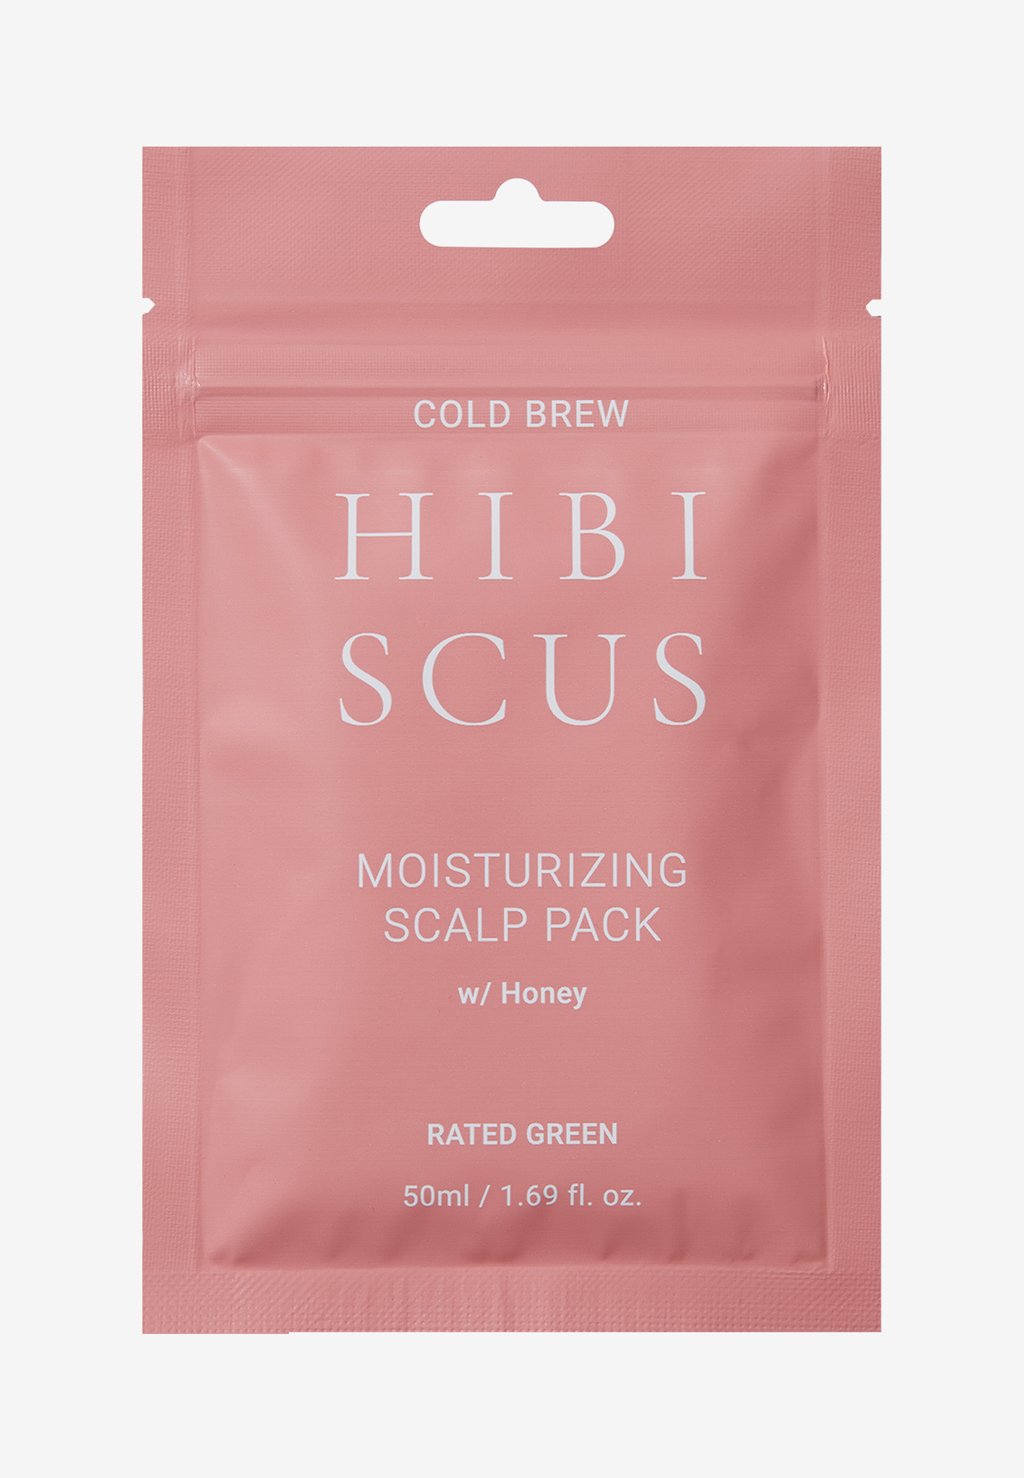 Набор для волос Cold Brew Hibiscus Moisturizing Scalp Pack W/Med 2 Pack RATED GREEN увлажняющая маска для кожи головы с соком гибискуса rated green cold brew hibiscus moisturizing scalp pack w honey 50 мл